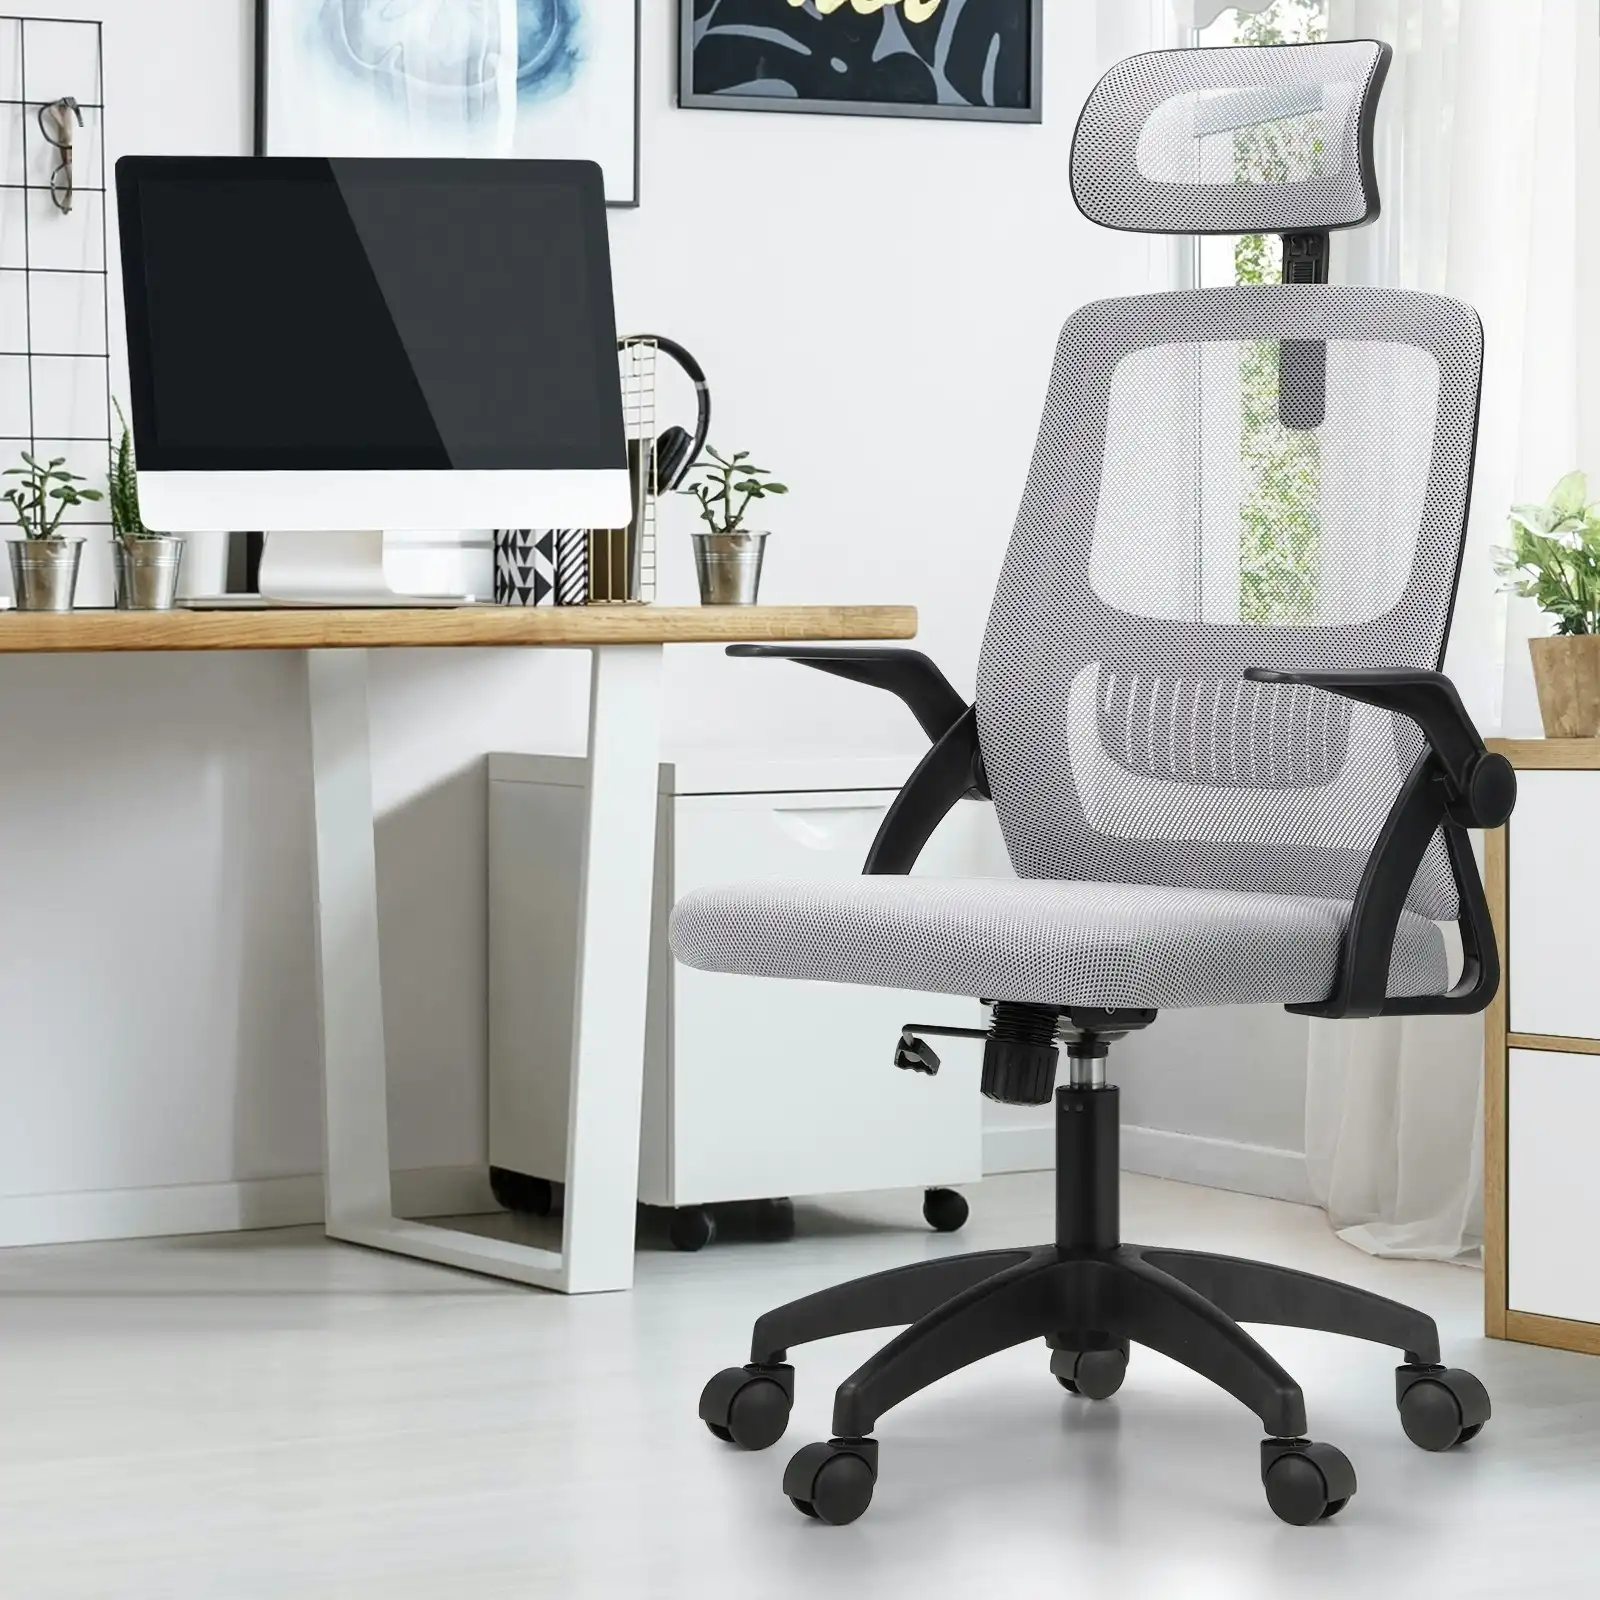 Oikiture Mesh Office Chair Executive Fabric Gaming Seat Racing Tilt Computer Black&Grey